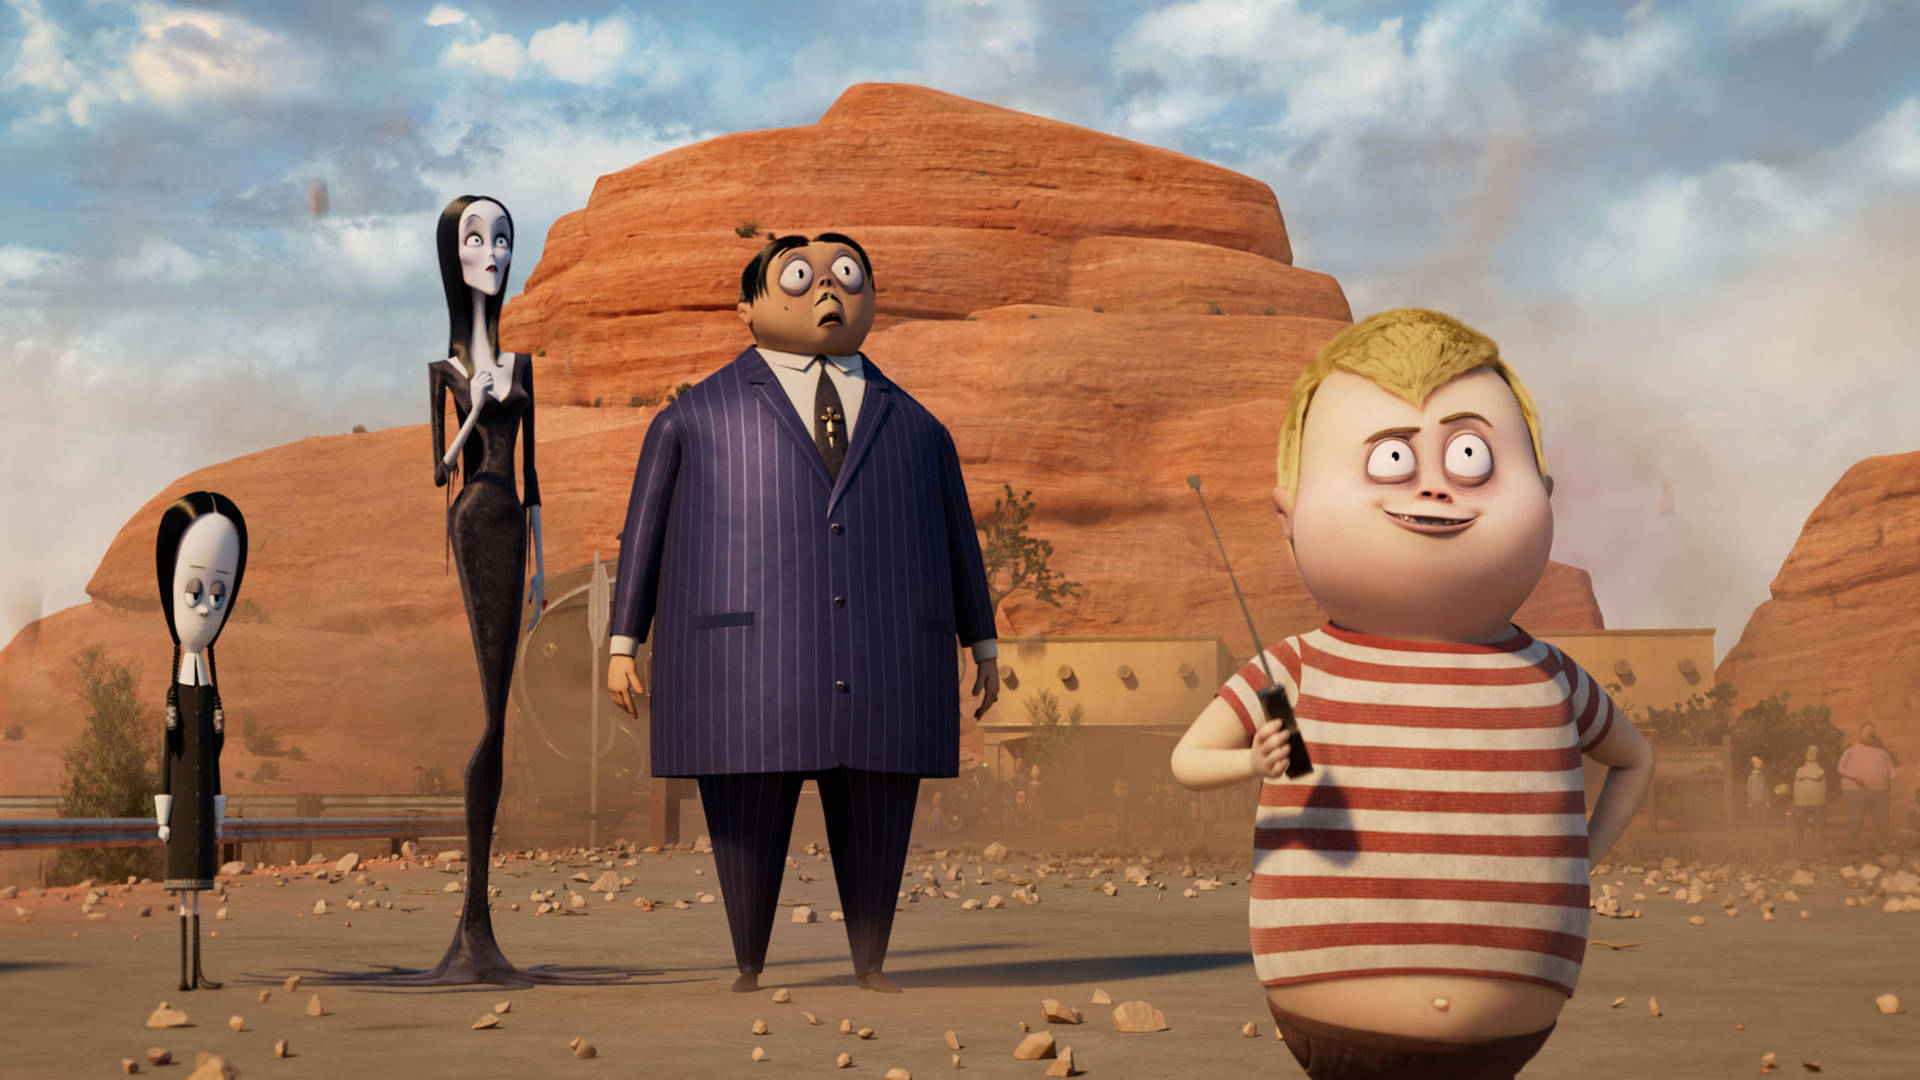 The Addams Family 2 In Desert Wallpaper